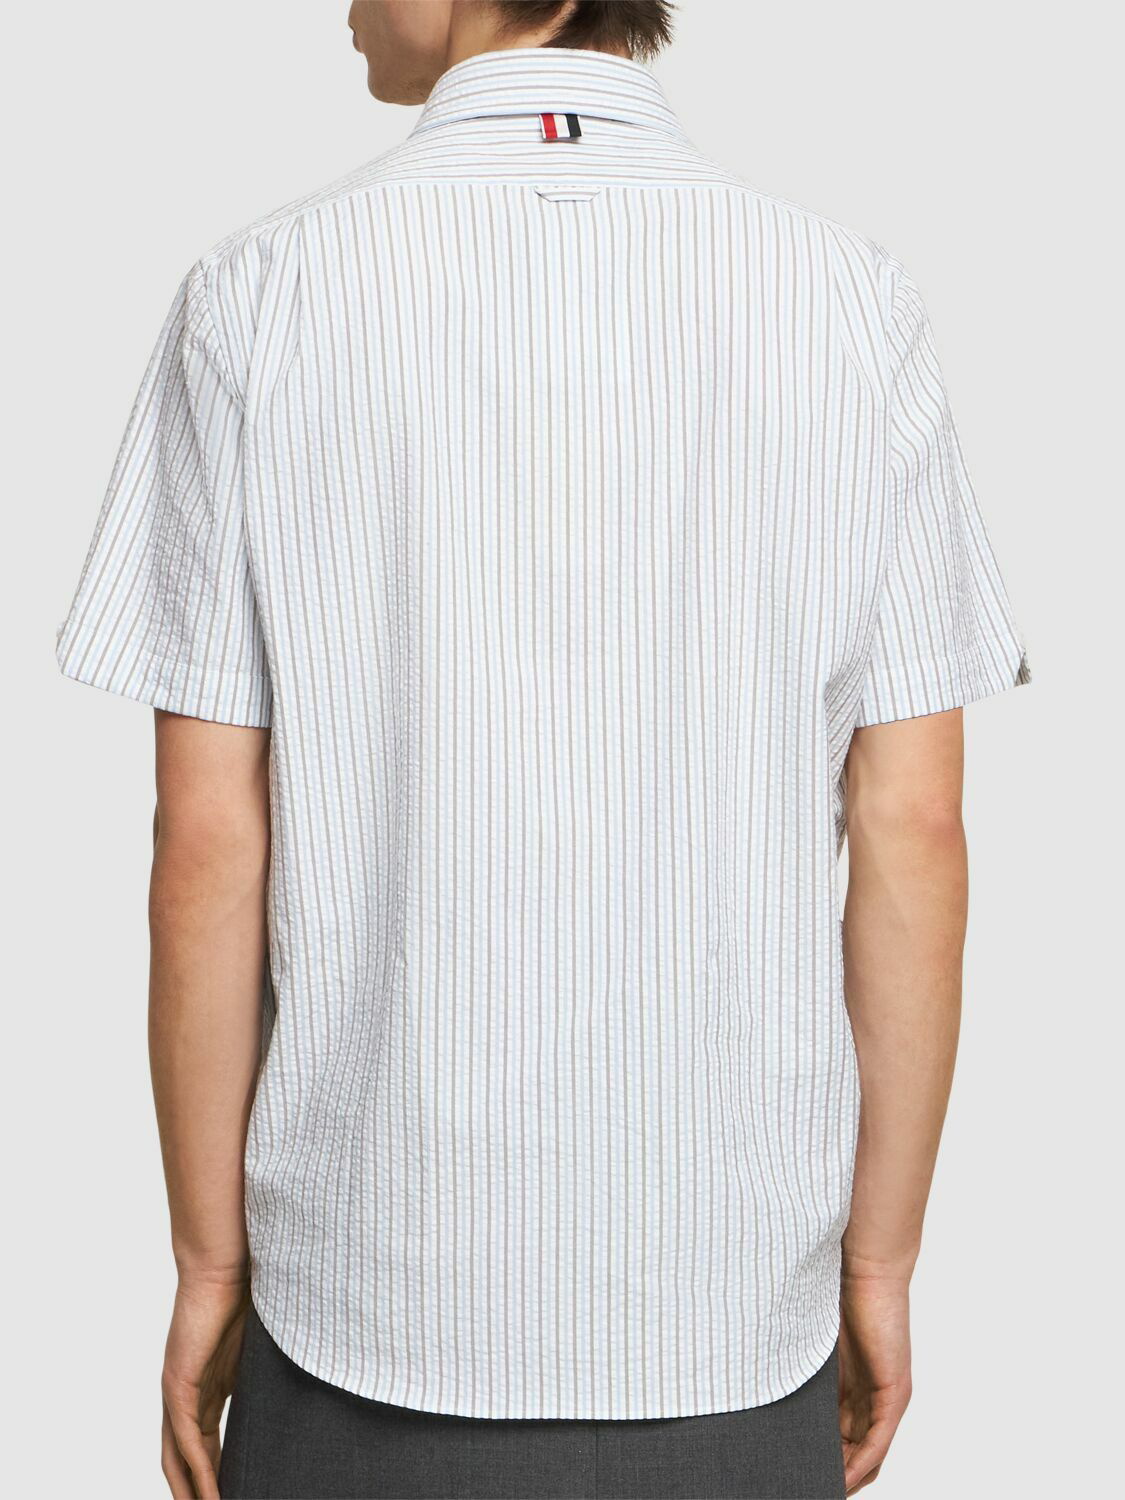 Thom Browne striped cotton shirt - White